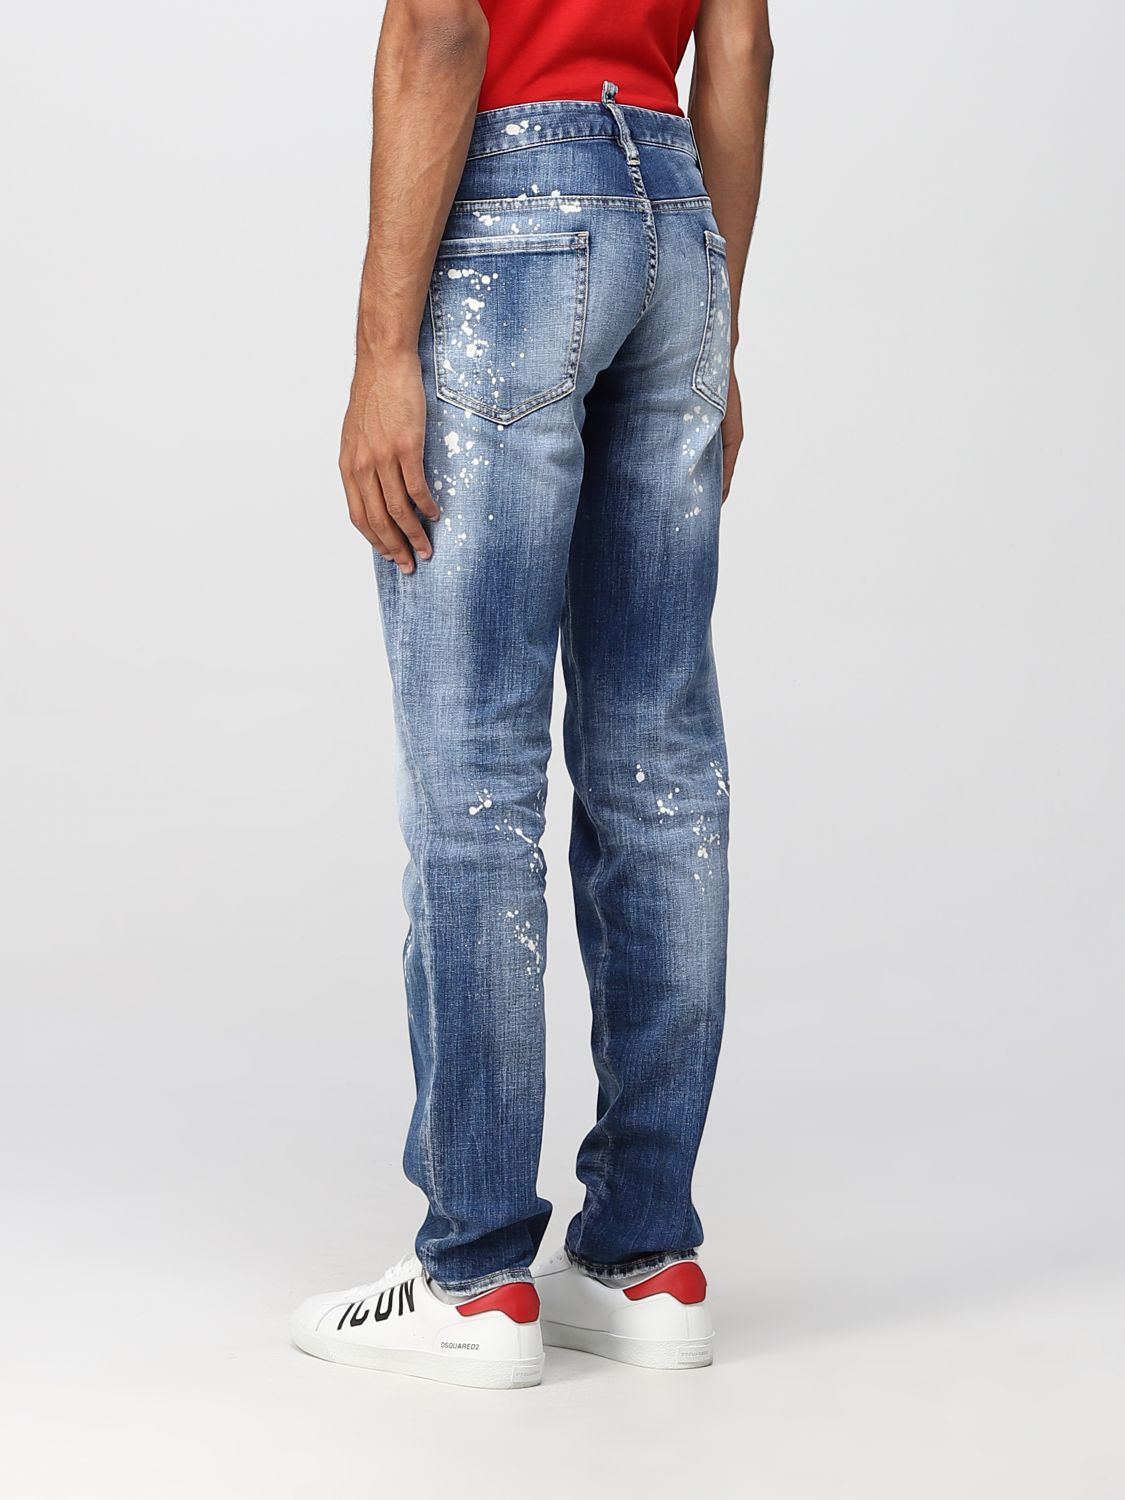 DSQUARED2: Jeans para Azul Oscuro | Dsquared2 en línea en GIGLIO.COM